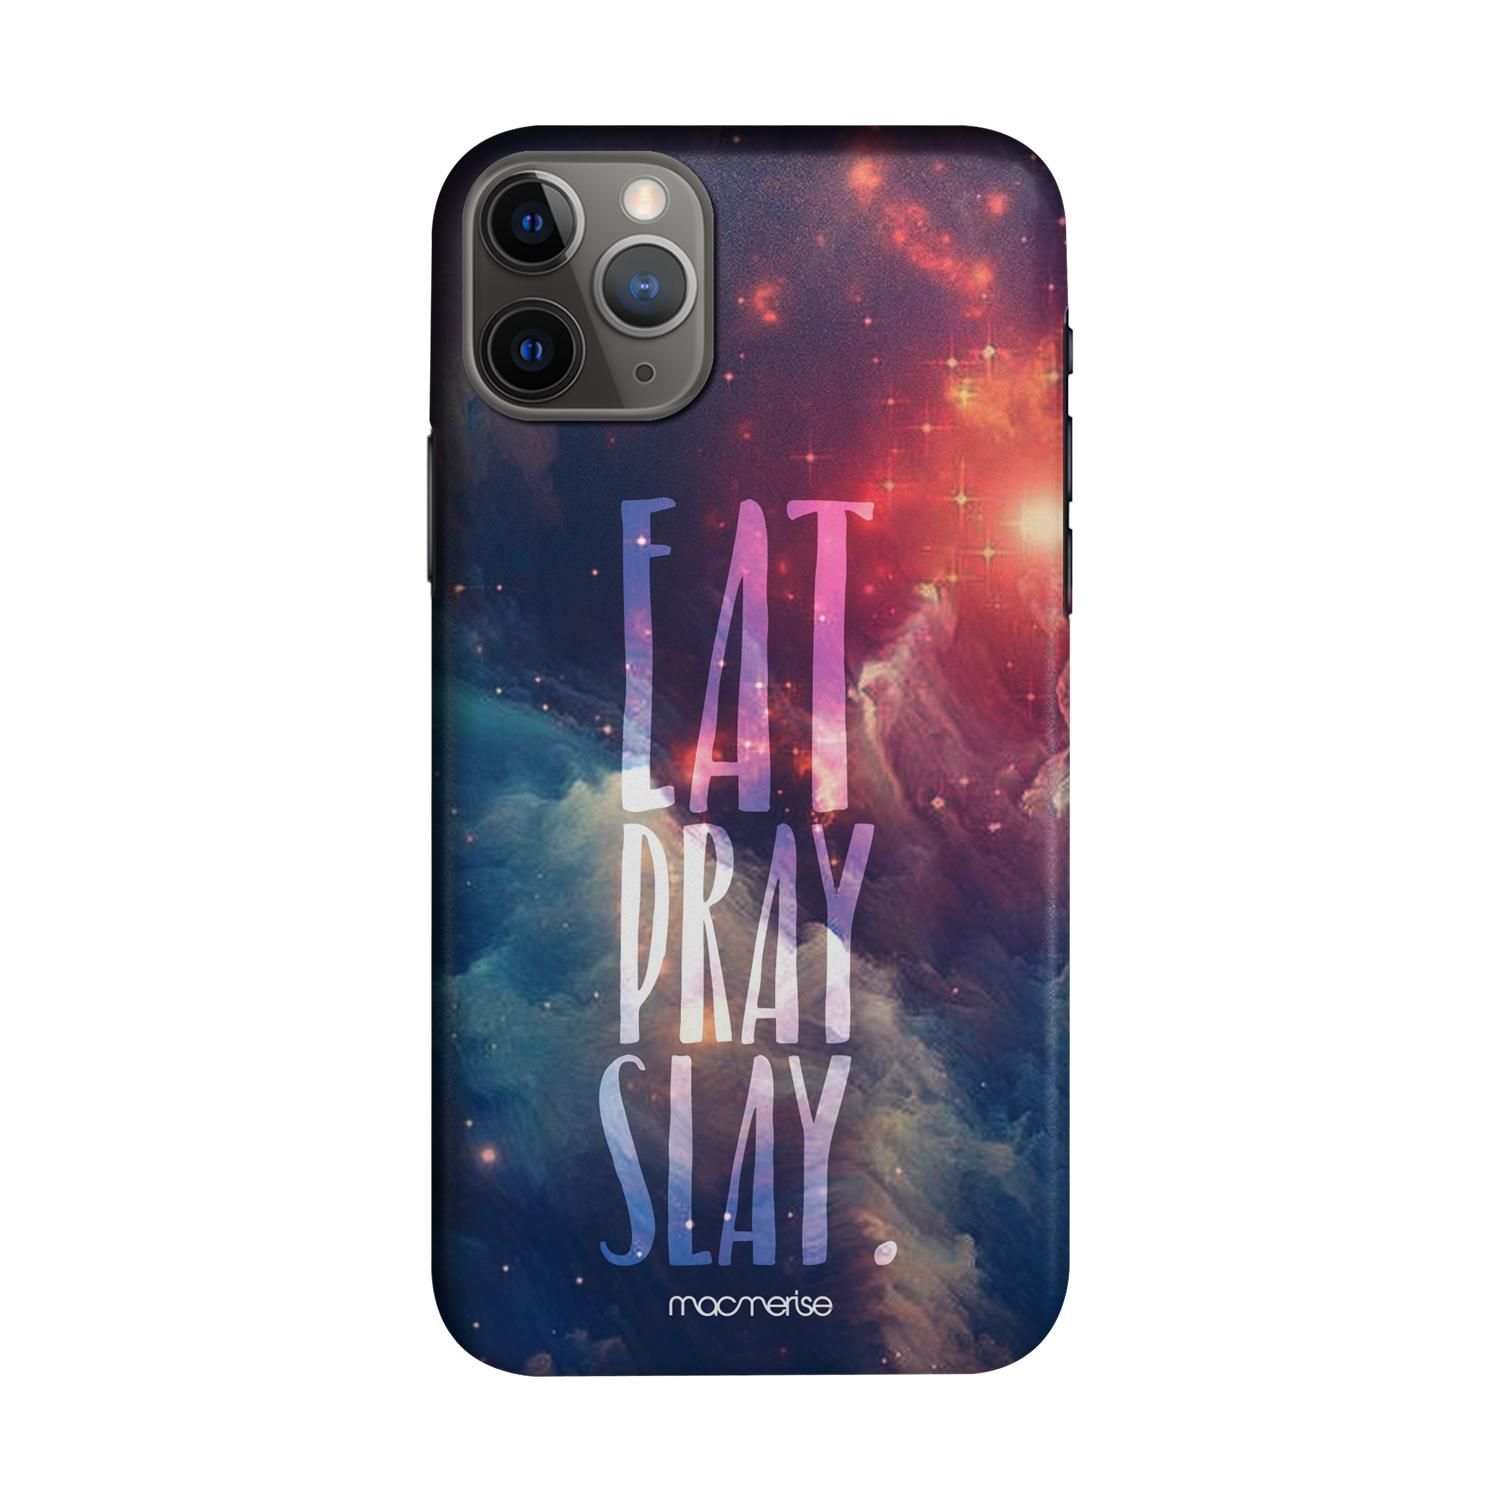 Buy Eat Pray Slay - Sleek Phone Case for iPhone 11 Pro Max Online